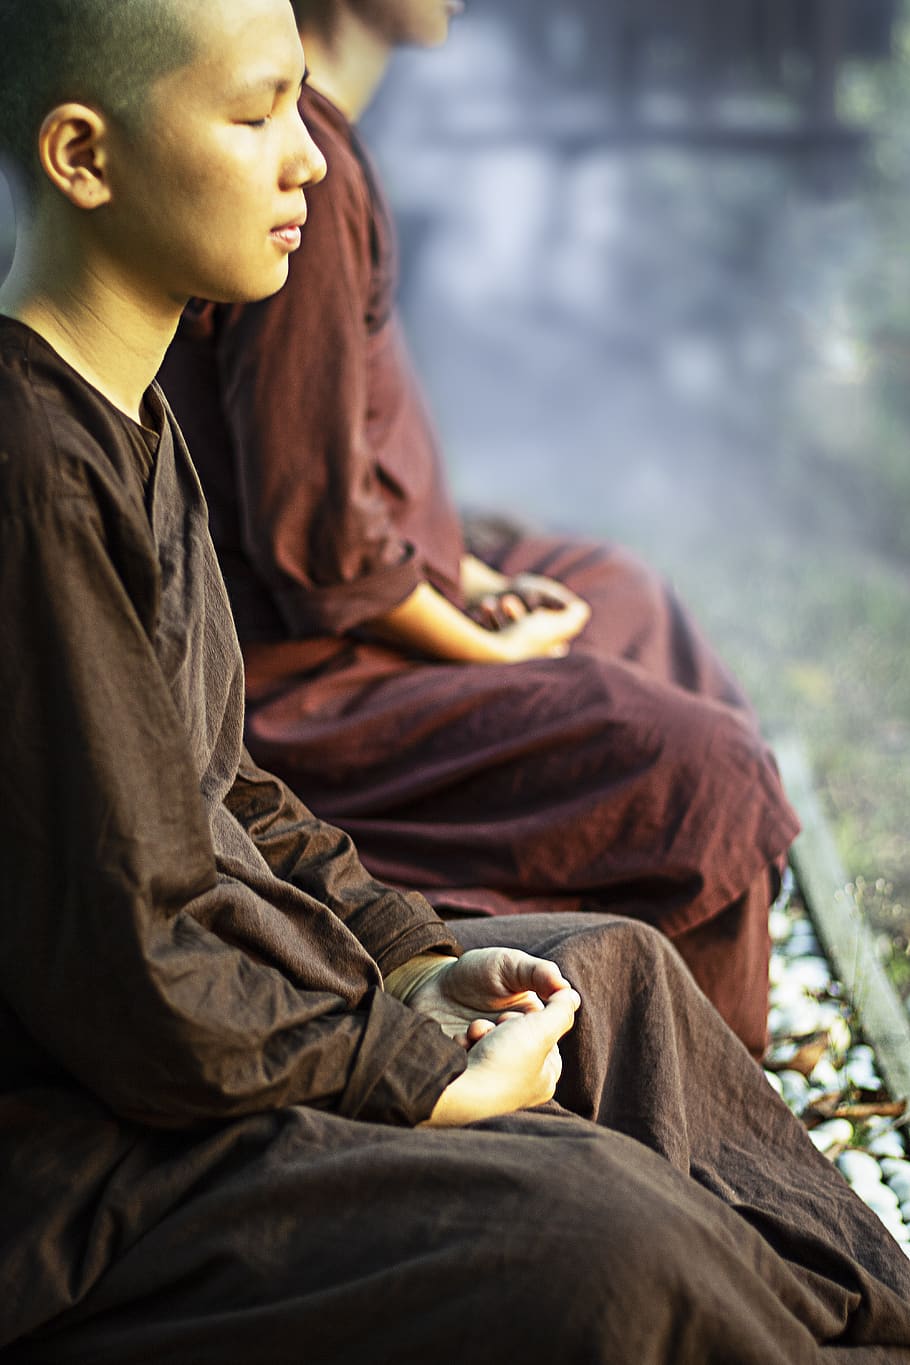 meditation, sayalay, nun, theravada, buddhism, meditate, buddhist, meditating, sitting, one person